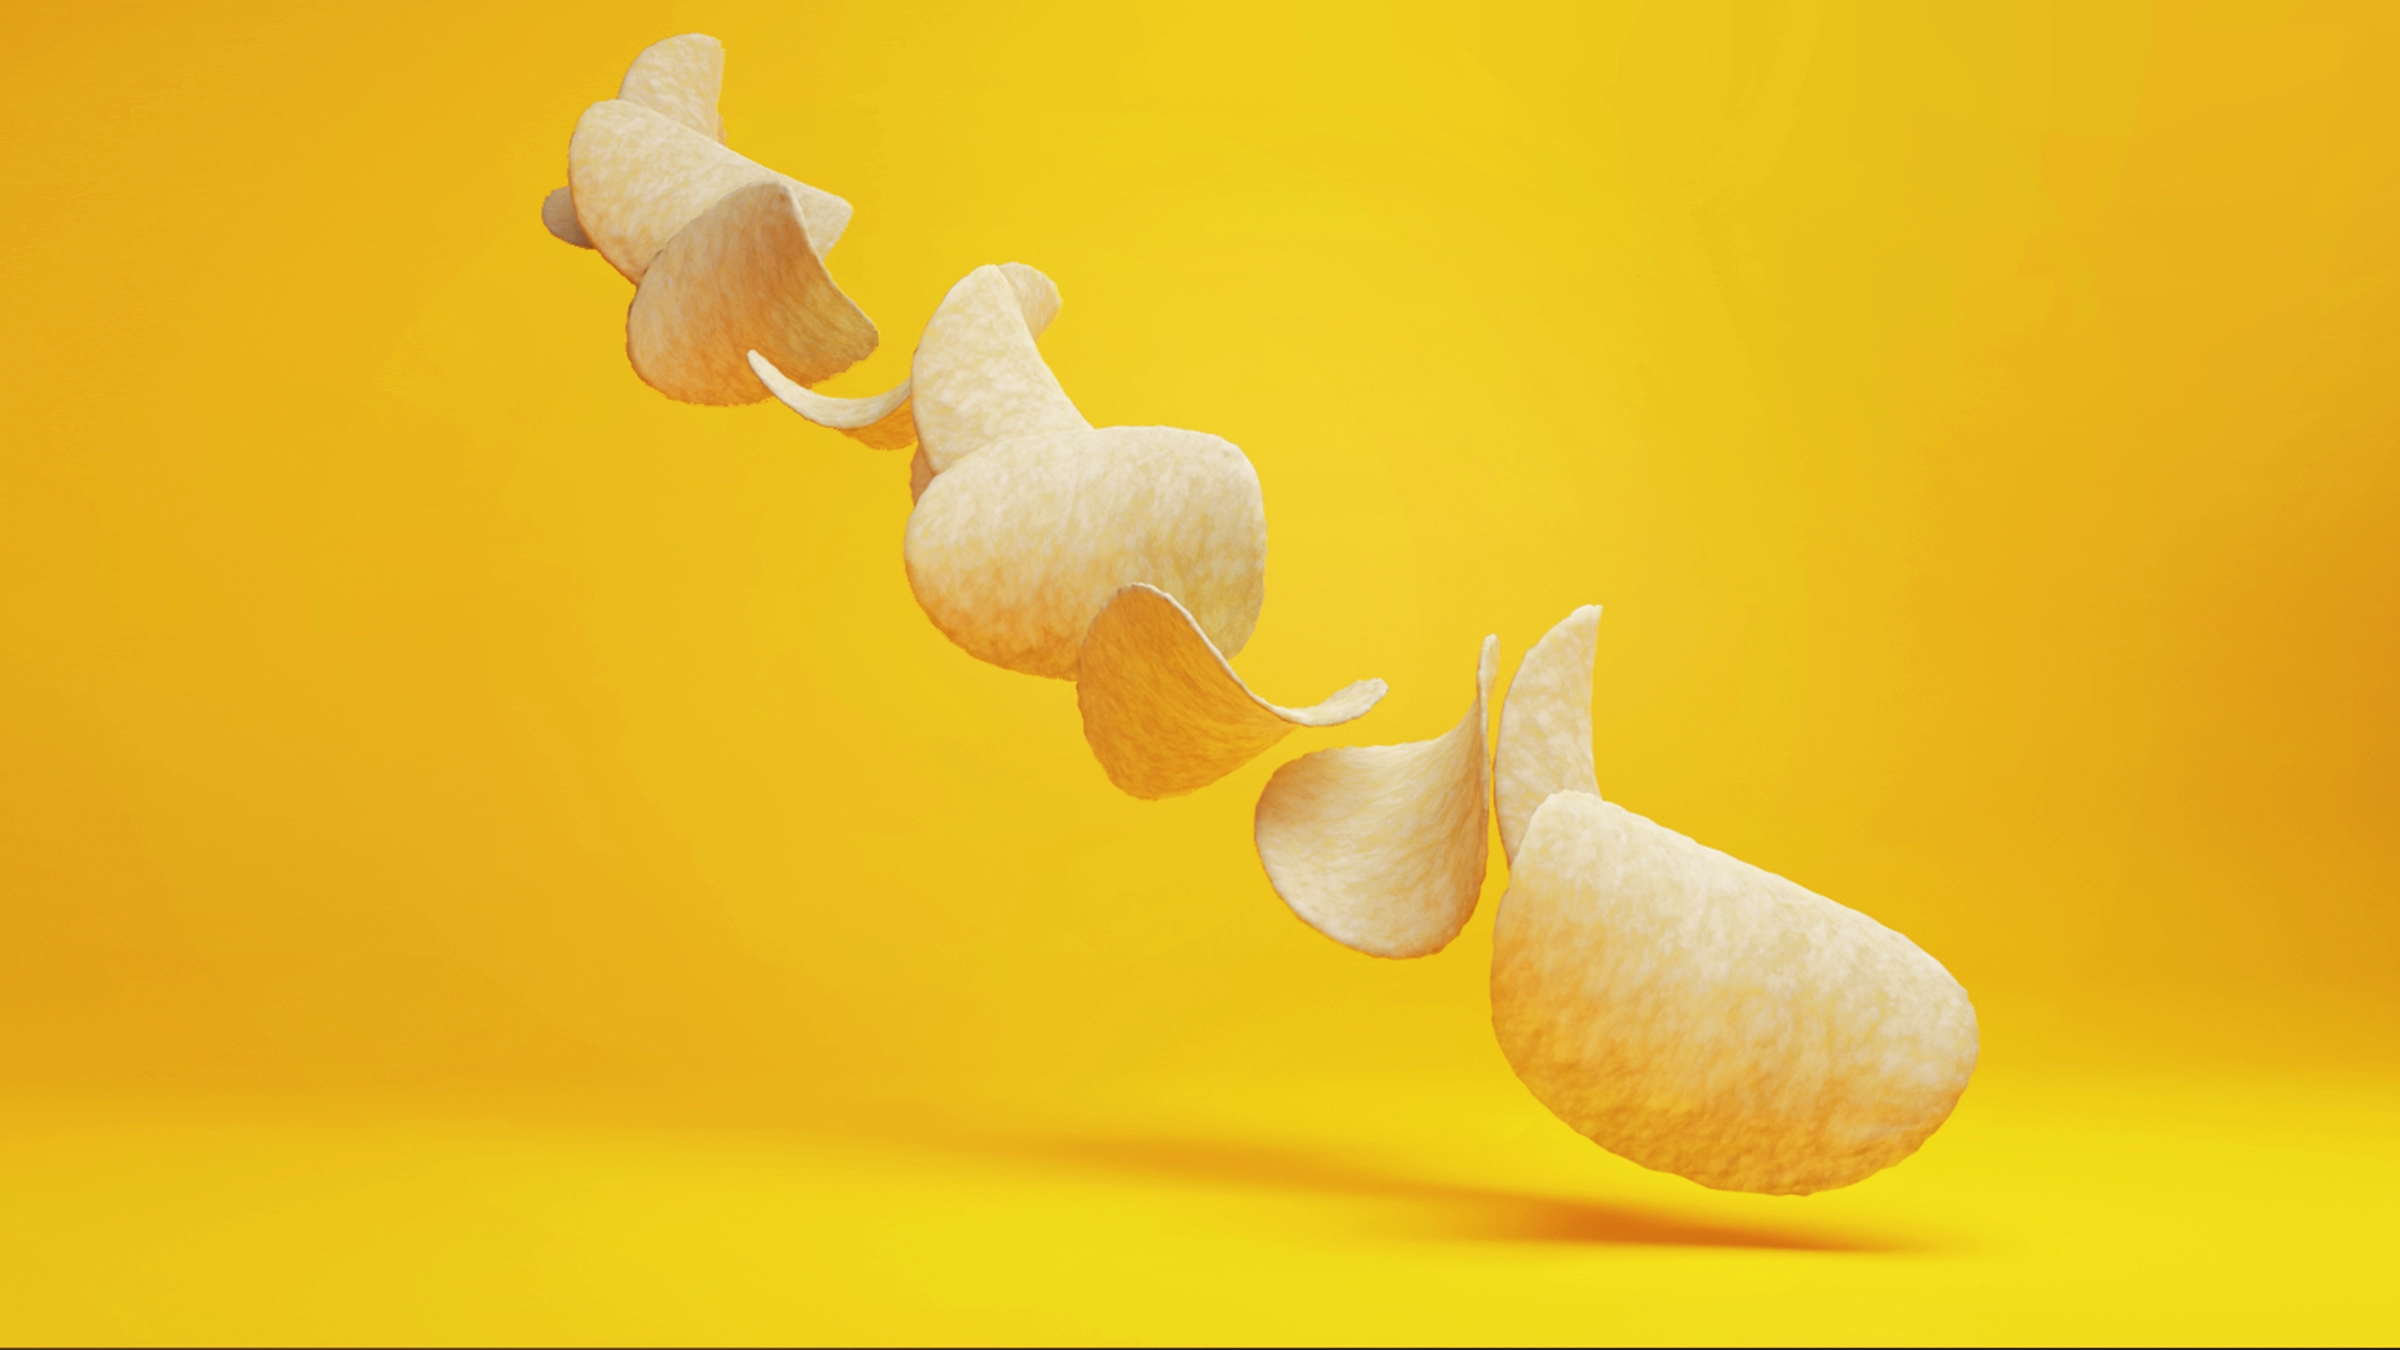 Blender Array - Potato Chips Fly in Row